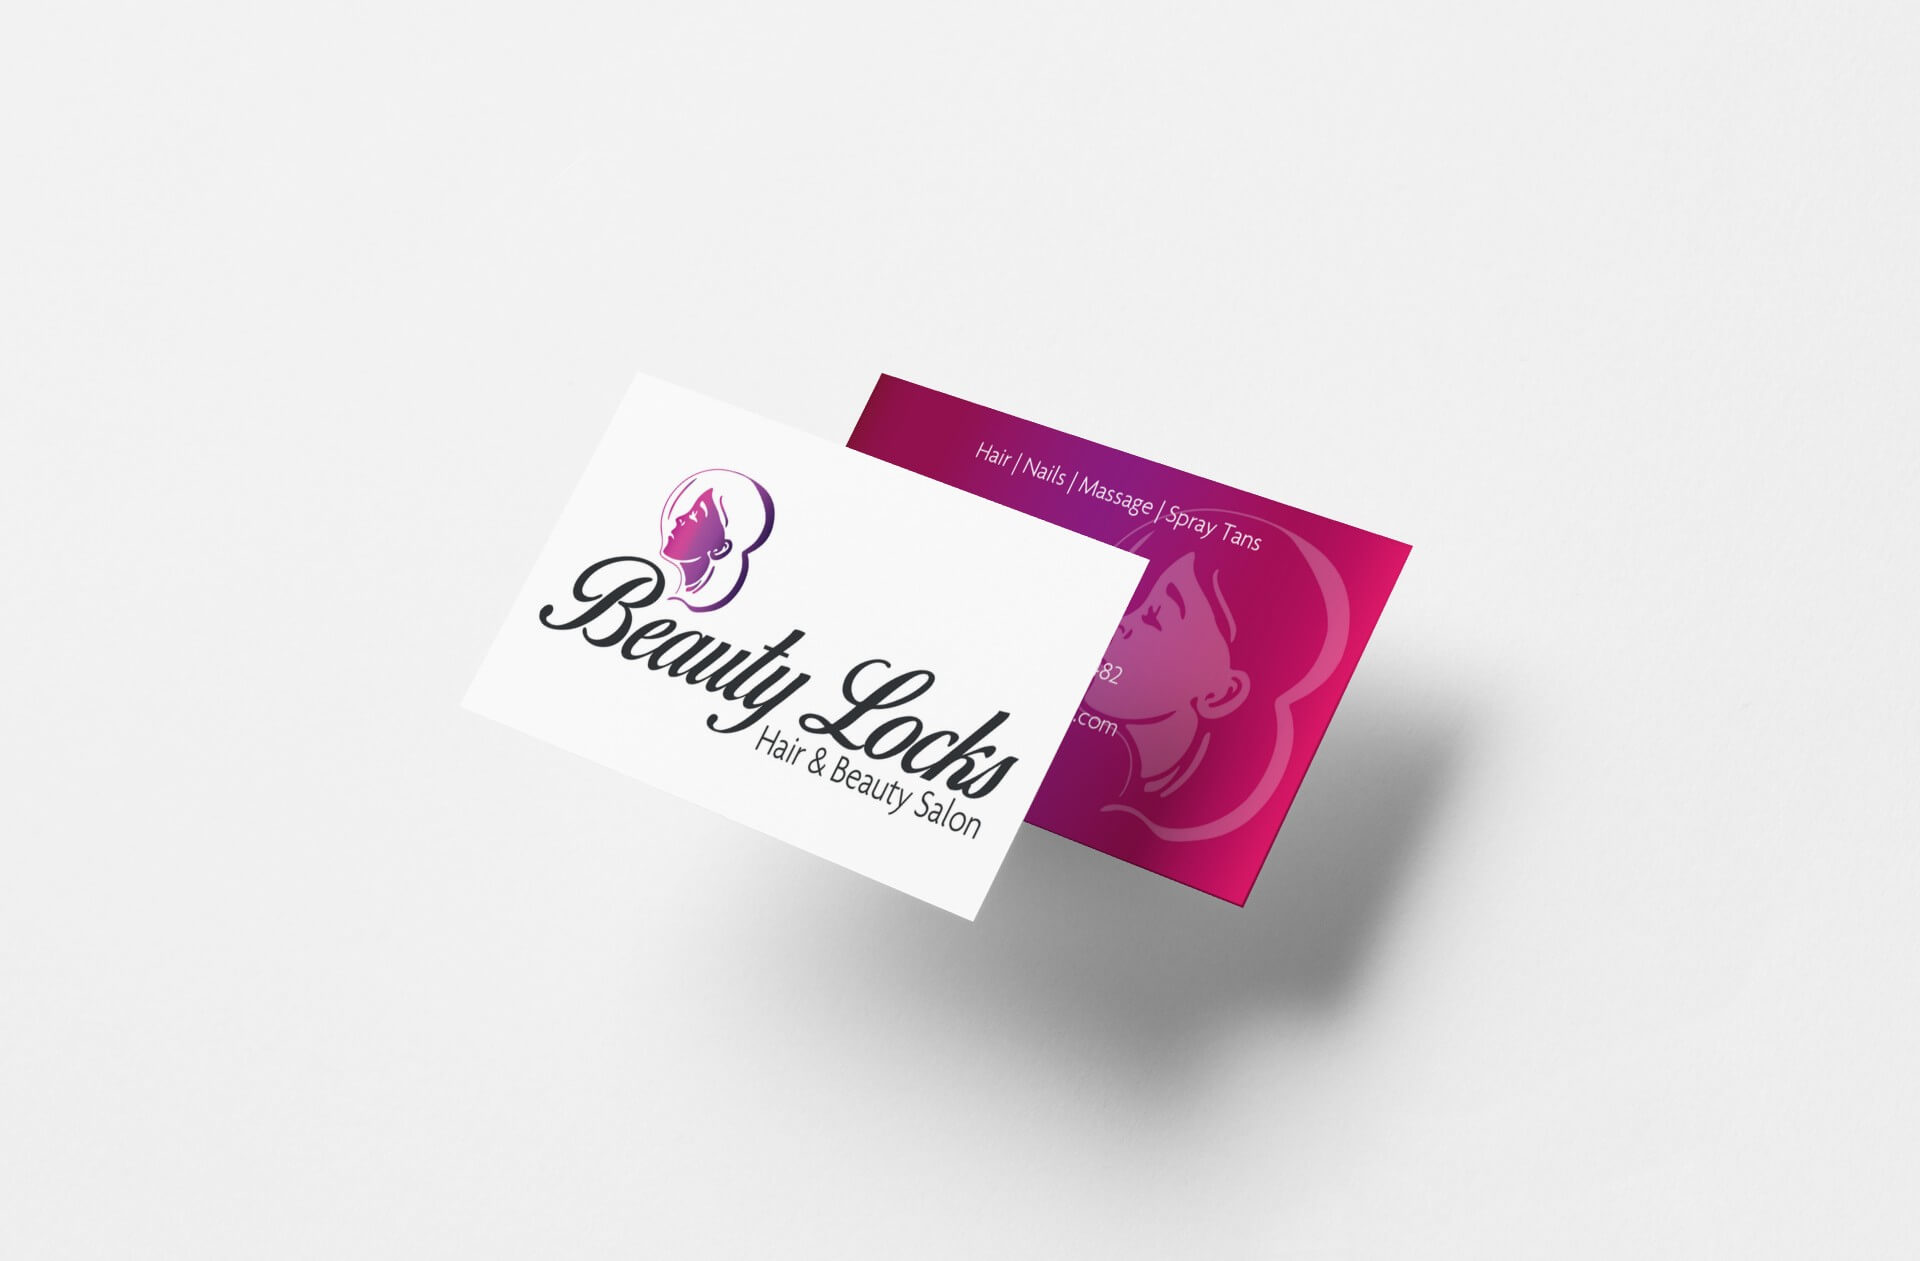 Beauty Locks - Logo and Brand Identity Design by The Logo Creative (1)